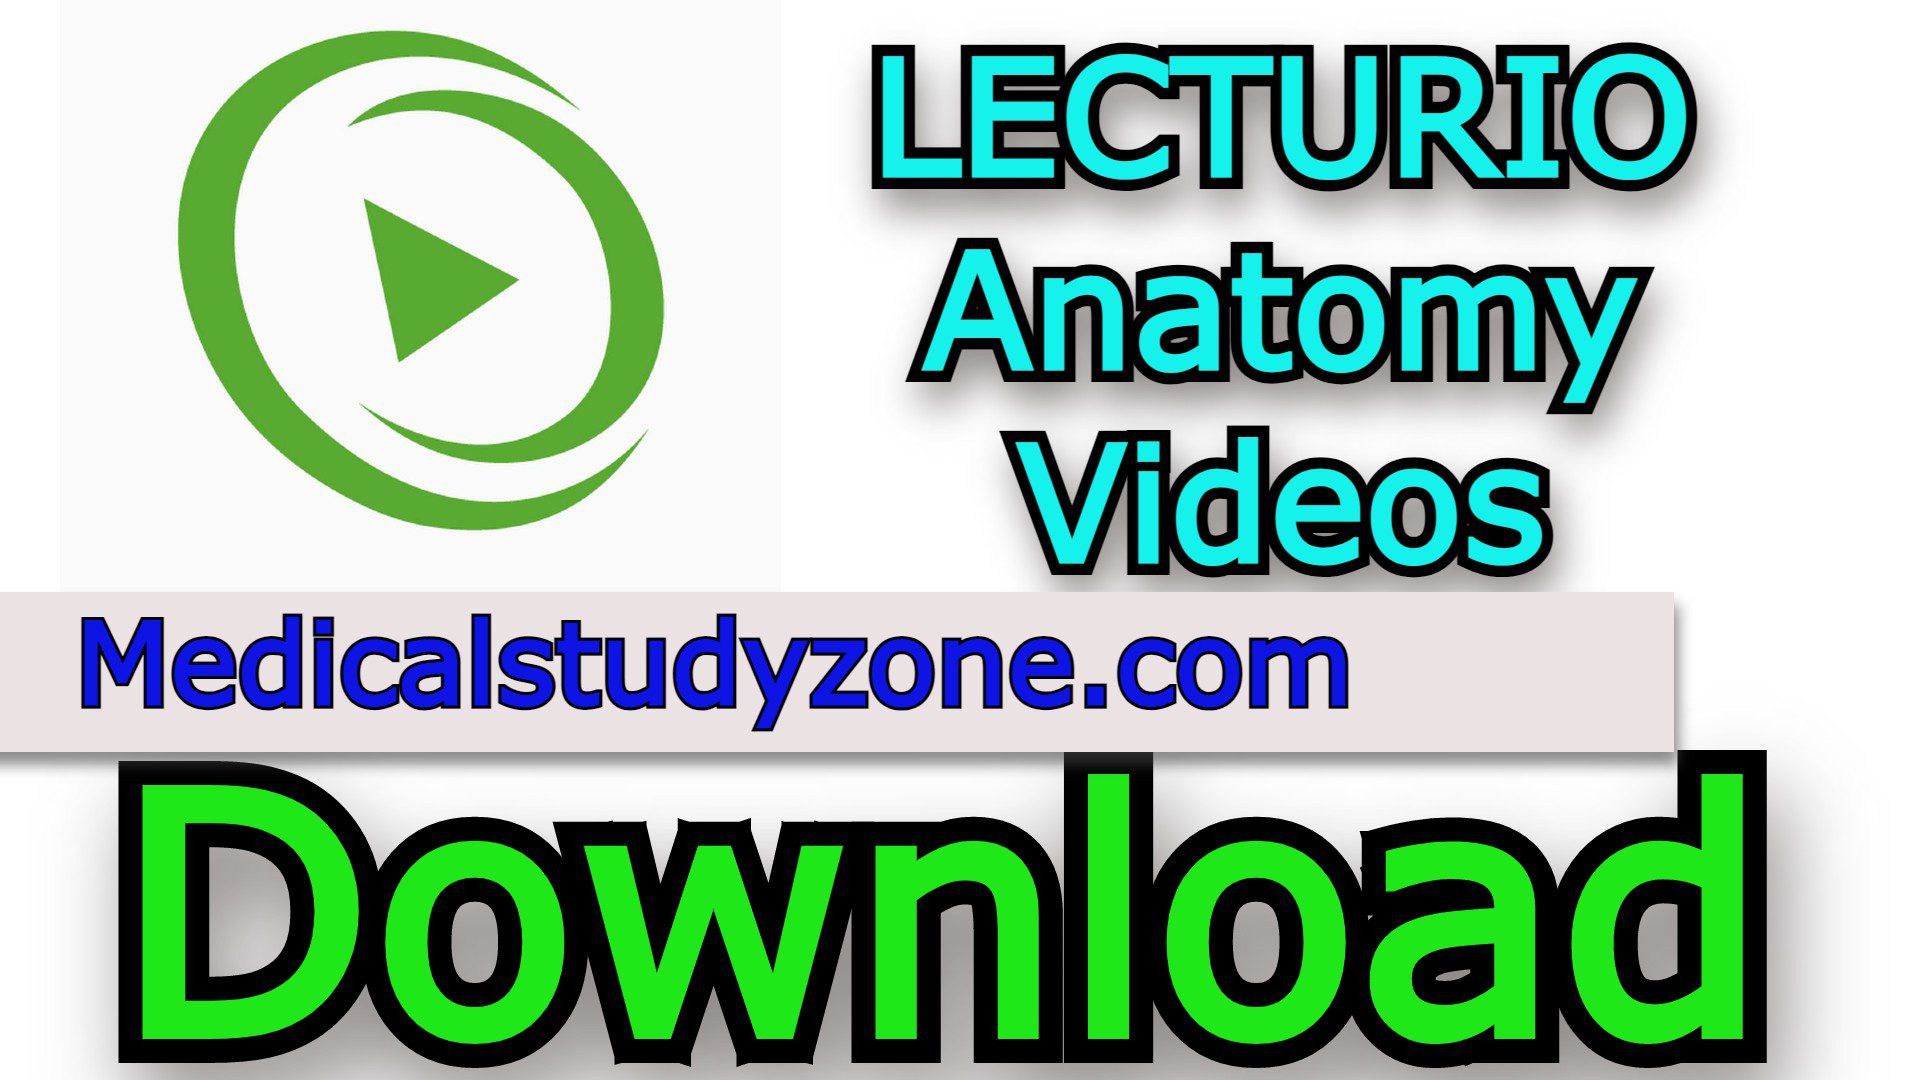 LECTURIO Anatomy Videos 2022 Free Download